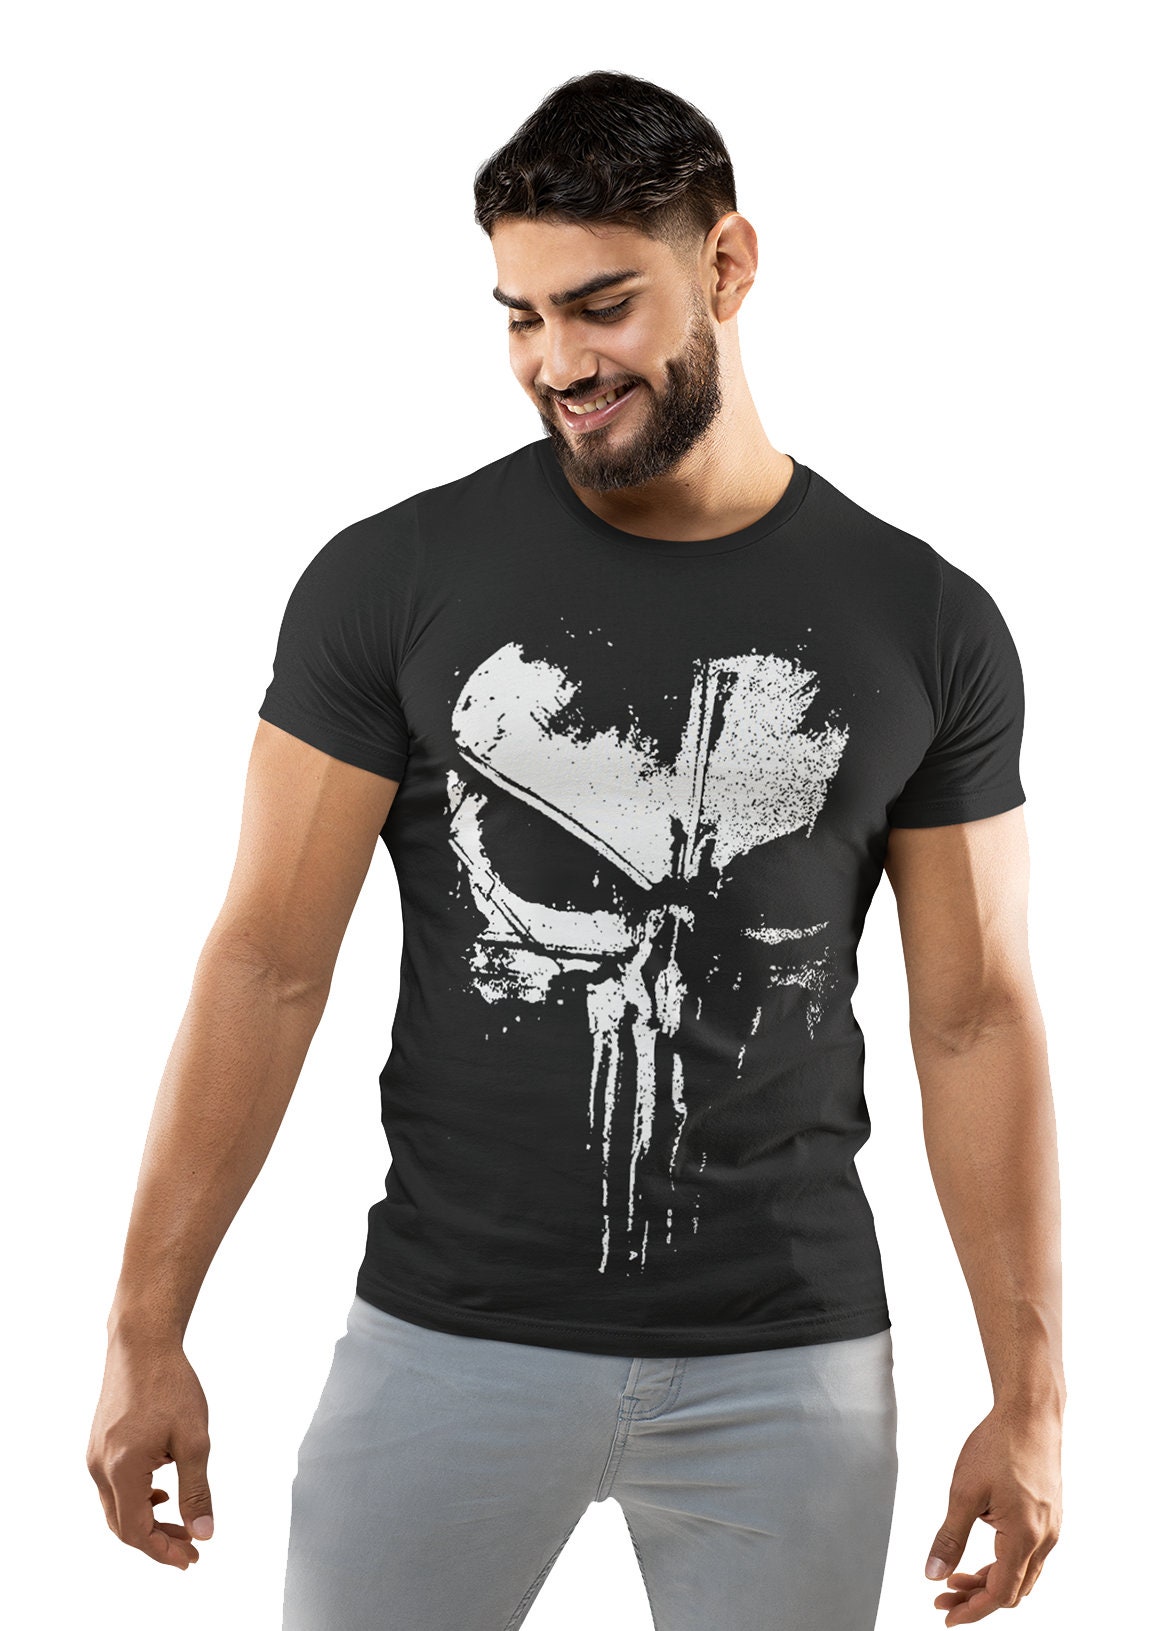 Raadplegen Coördineren defect Punisher T Shirt - Etsy